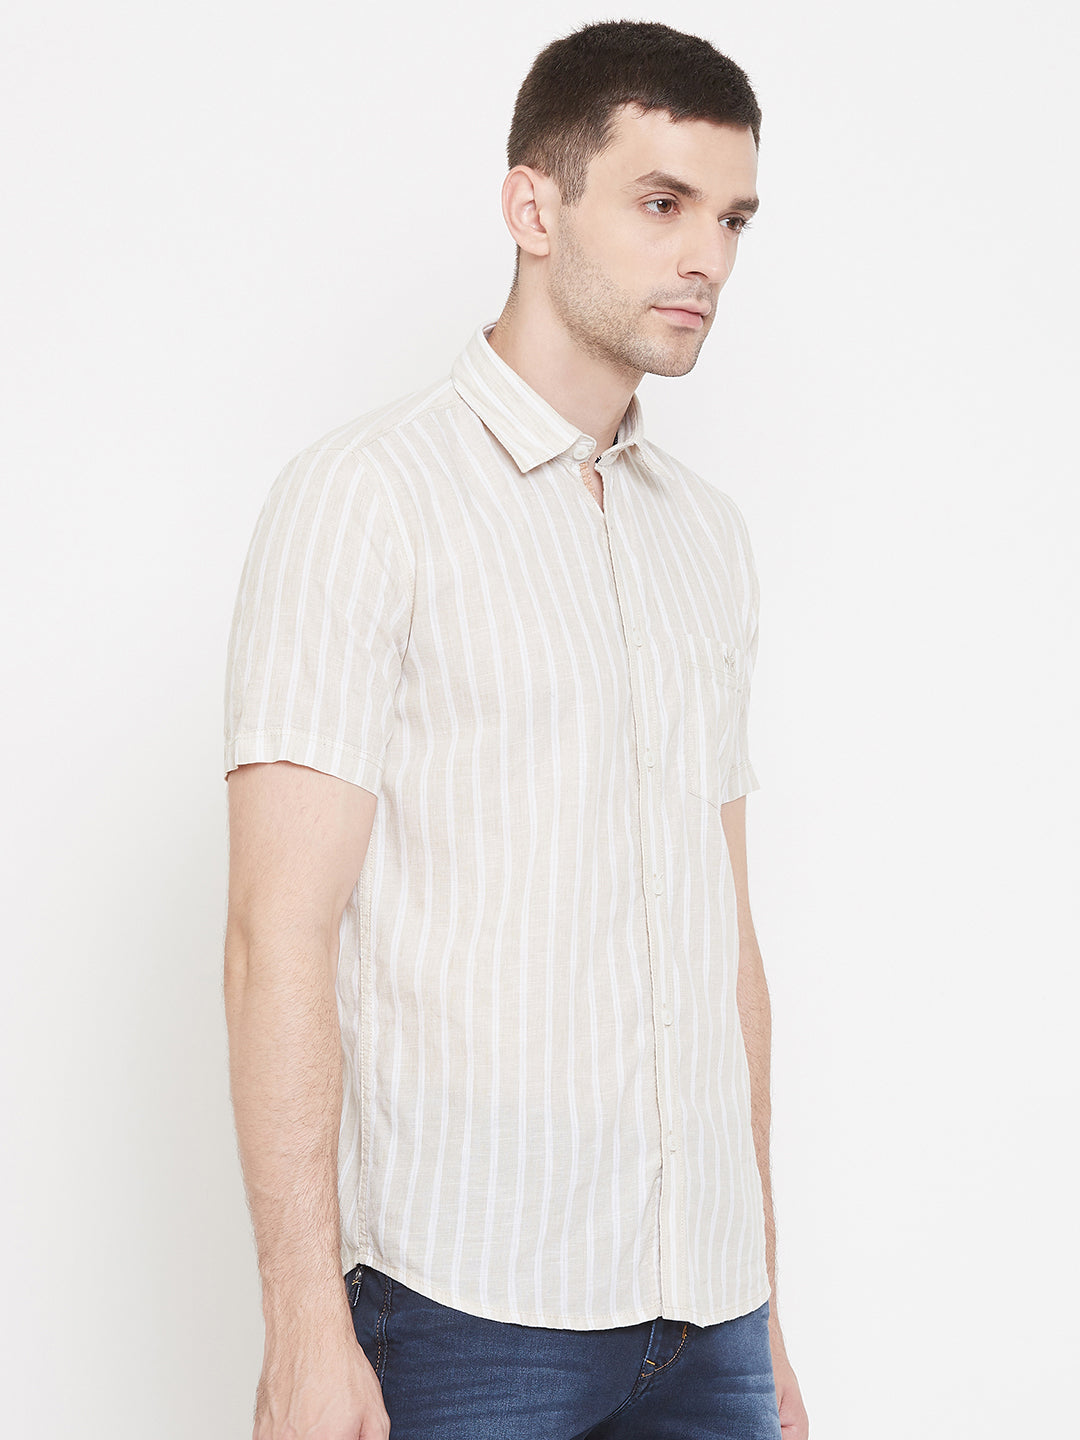 Beige striped shirt - Men Shirts